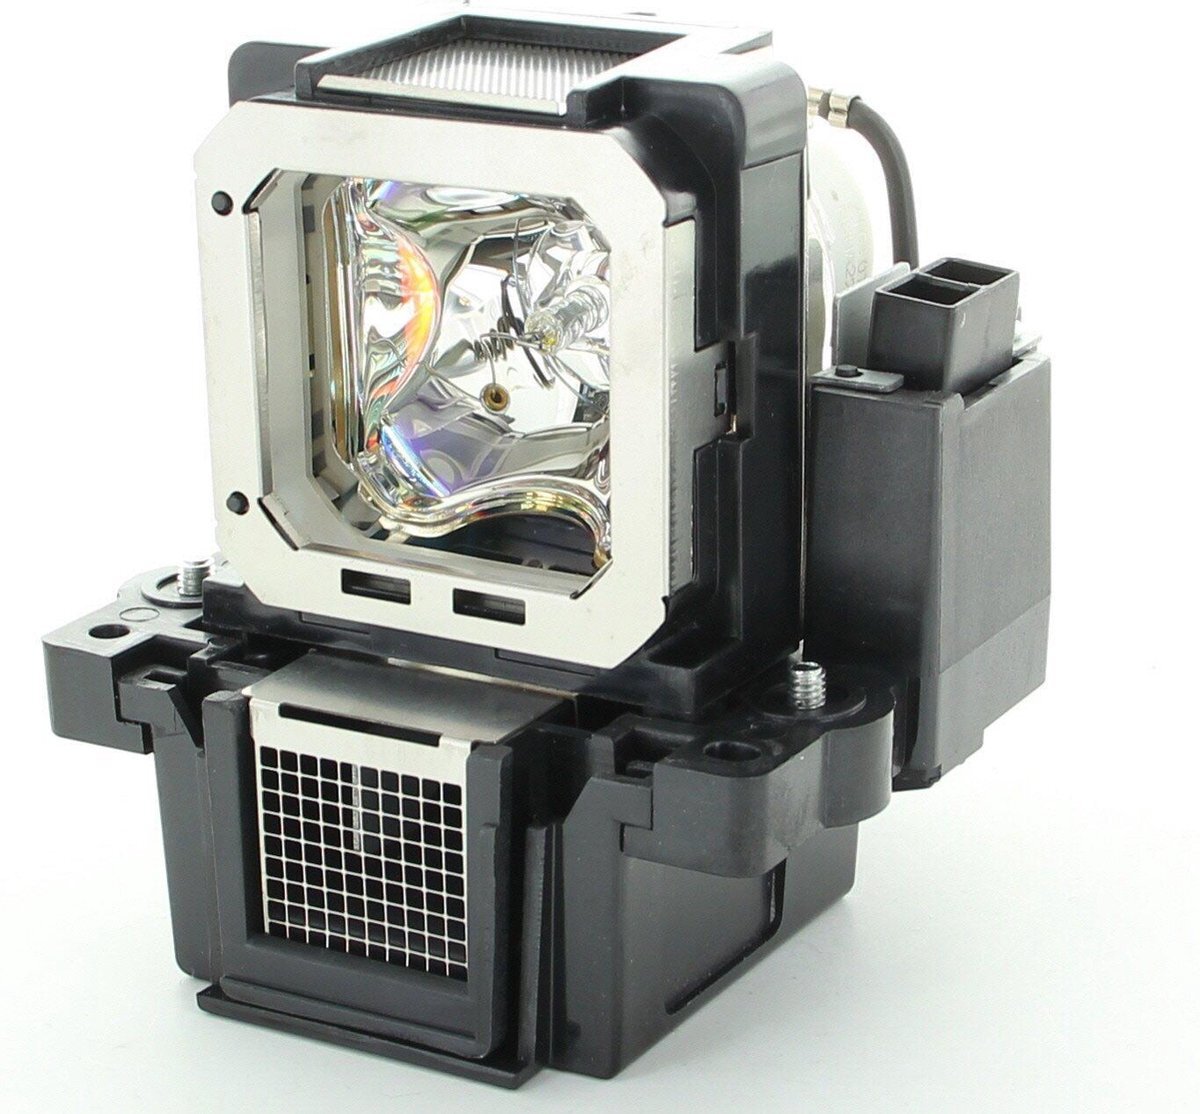 QualityLamp JVC DLA-X7000B beamerlamp PK-L2615U / PK-L2615UG, bevat originele NSHA lamp. Prestaties gelijk aan origineel.